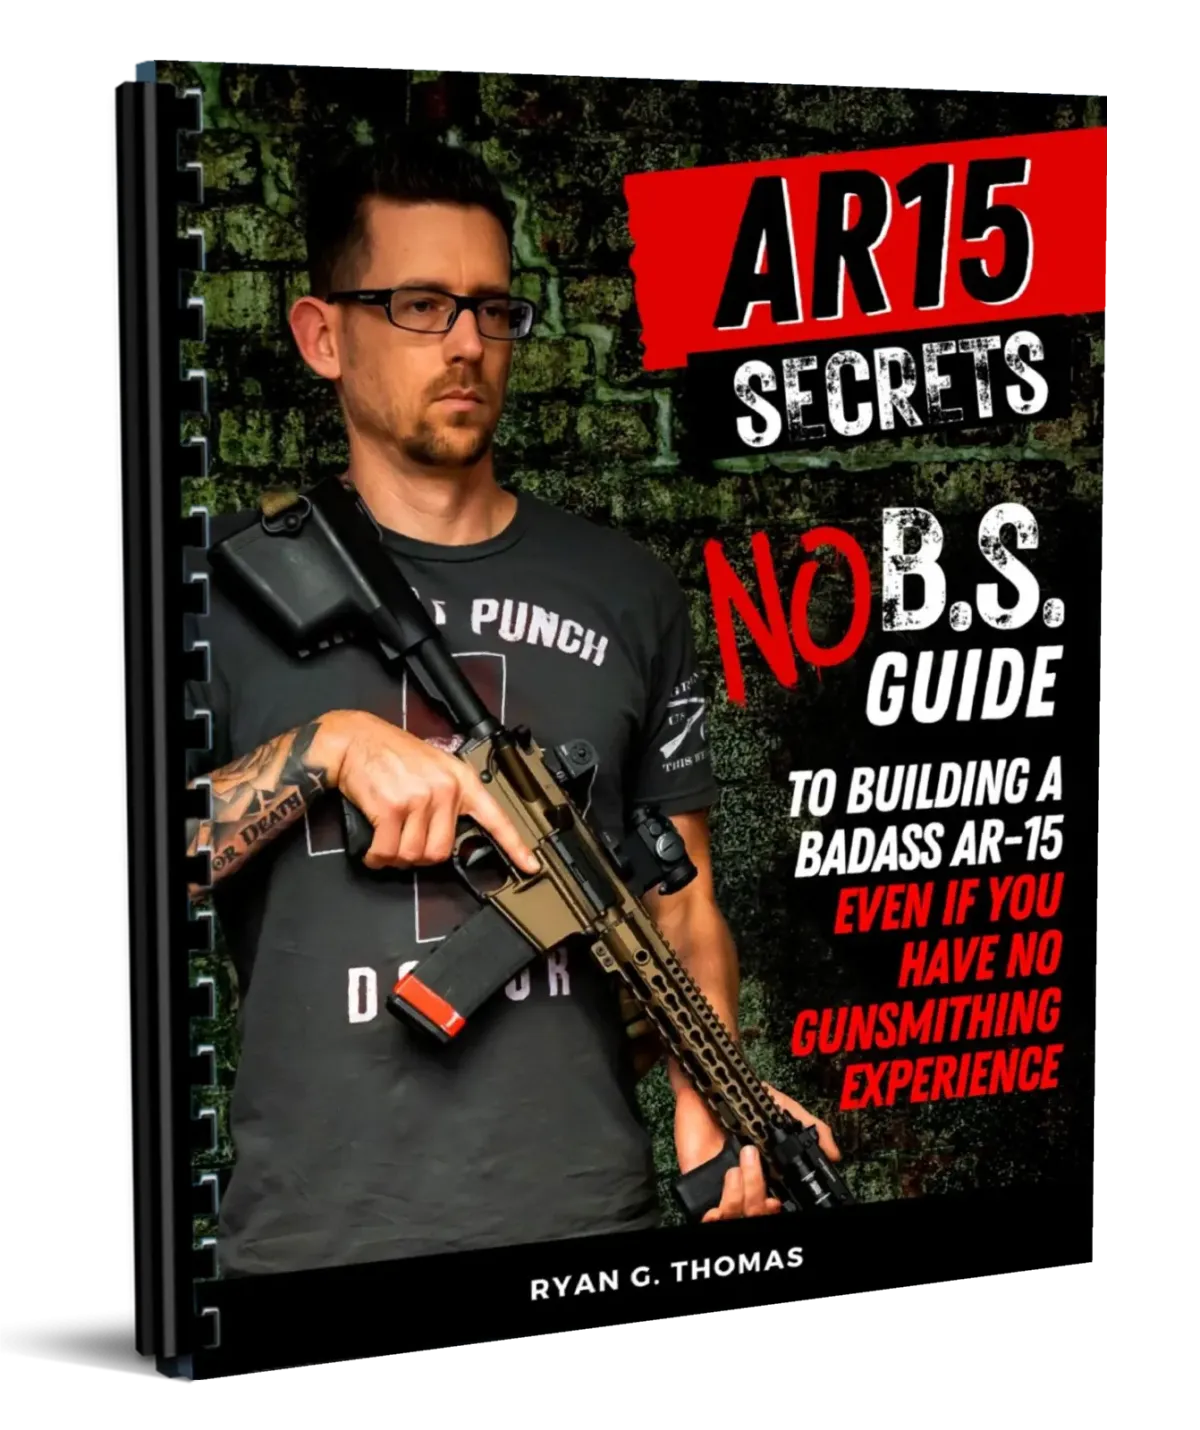 a515 secrets rifle building manual cover